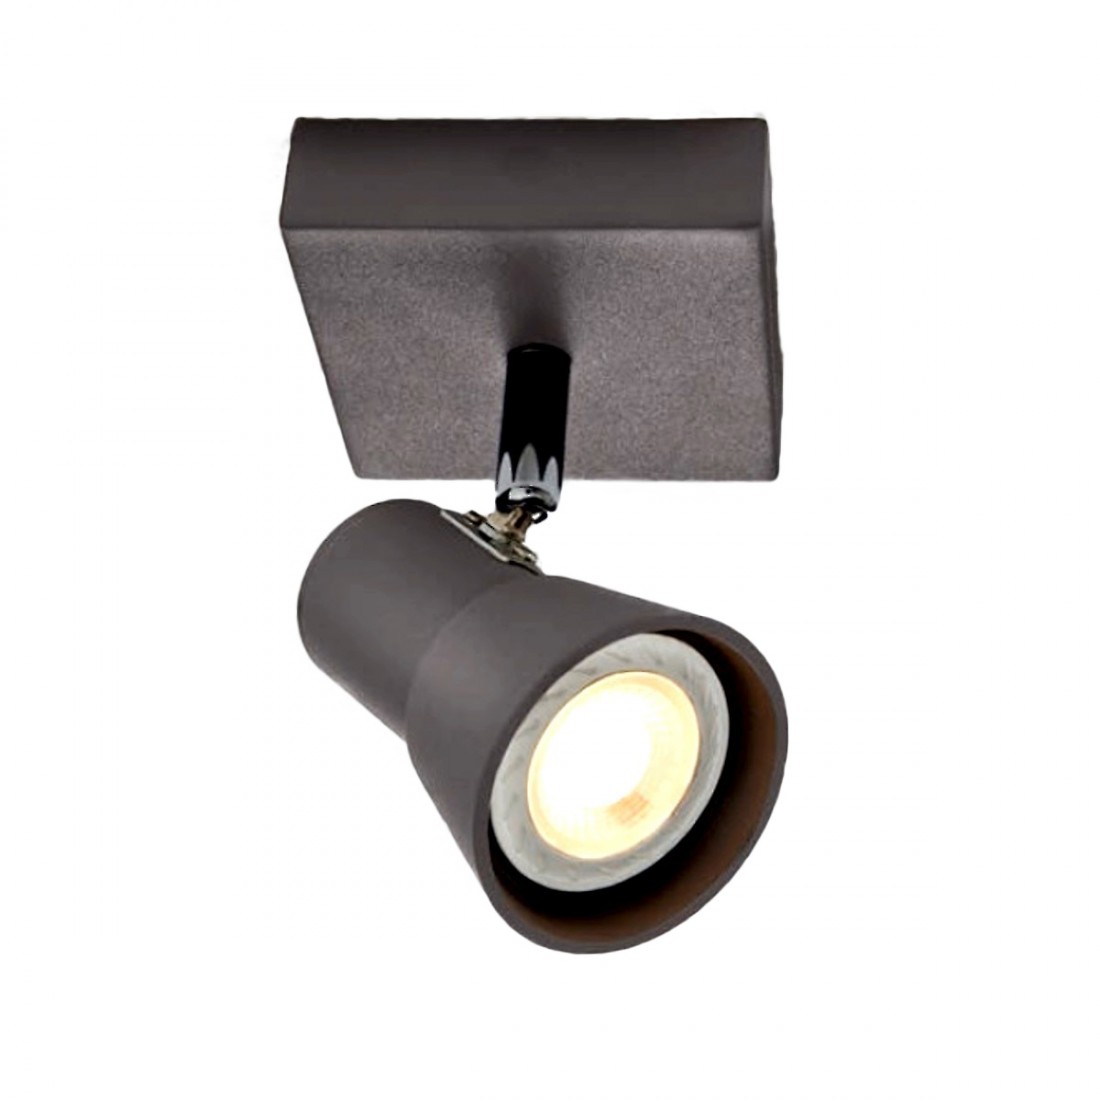 Spot und moderner mokkabrauner LED-Strahler Torcia Illuminando